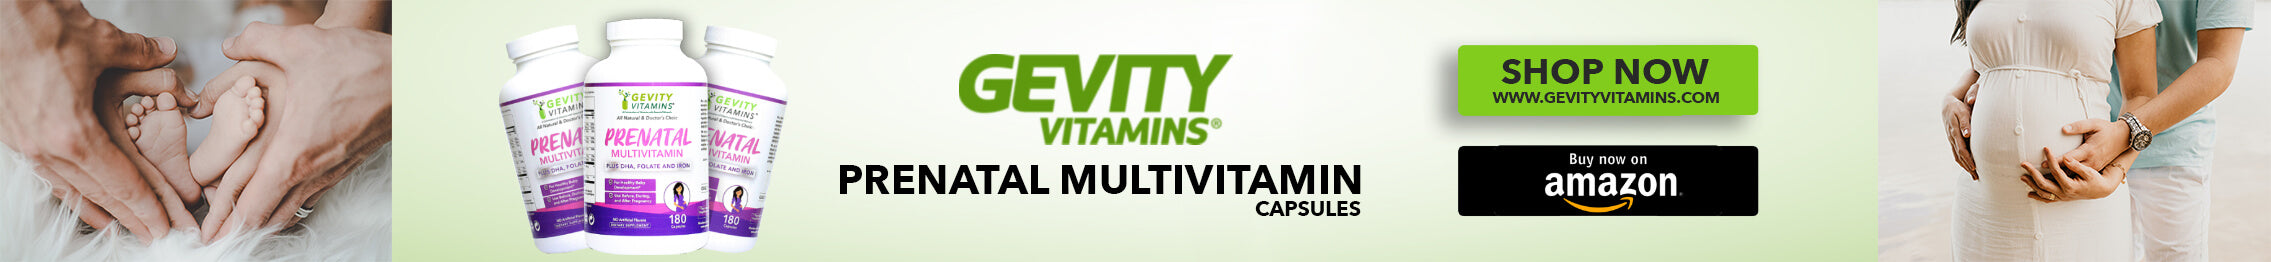 Prenatal vitamins Supplement - All Natural Supplement - Gevity Vitamins